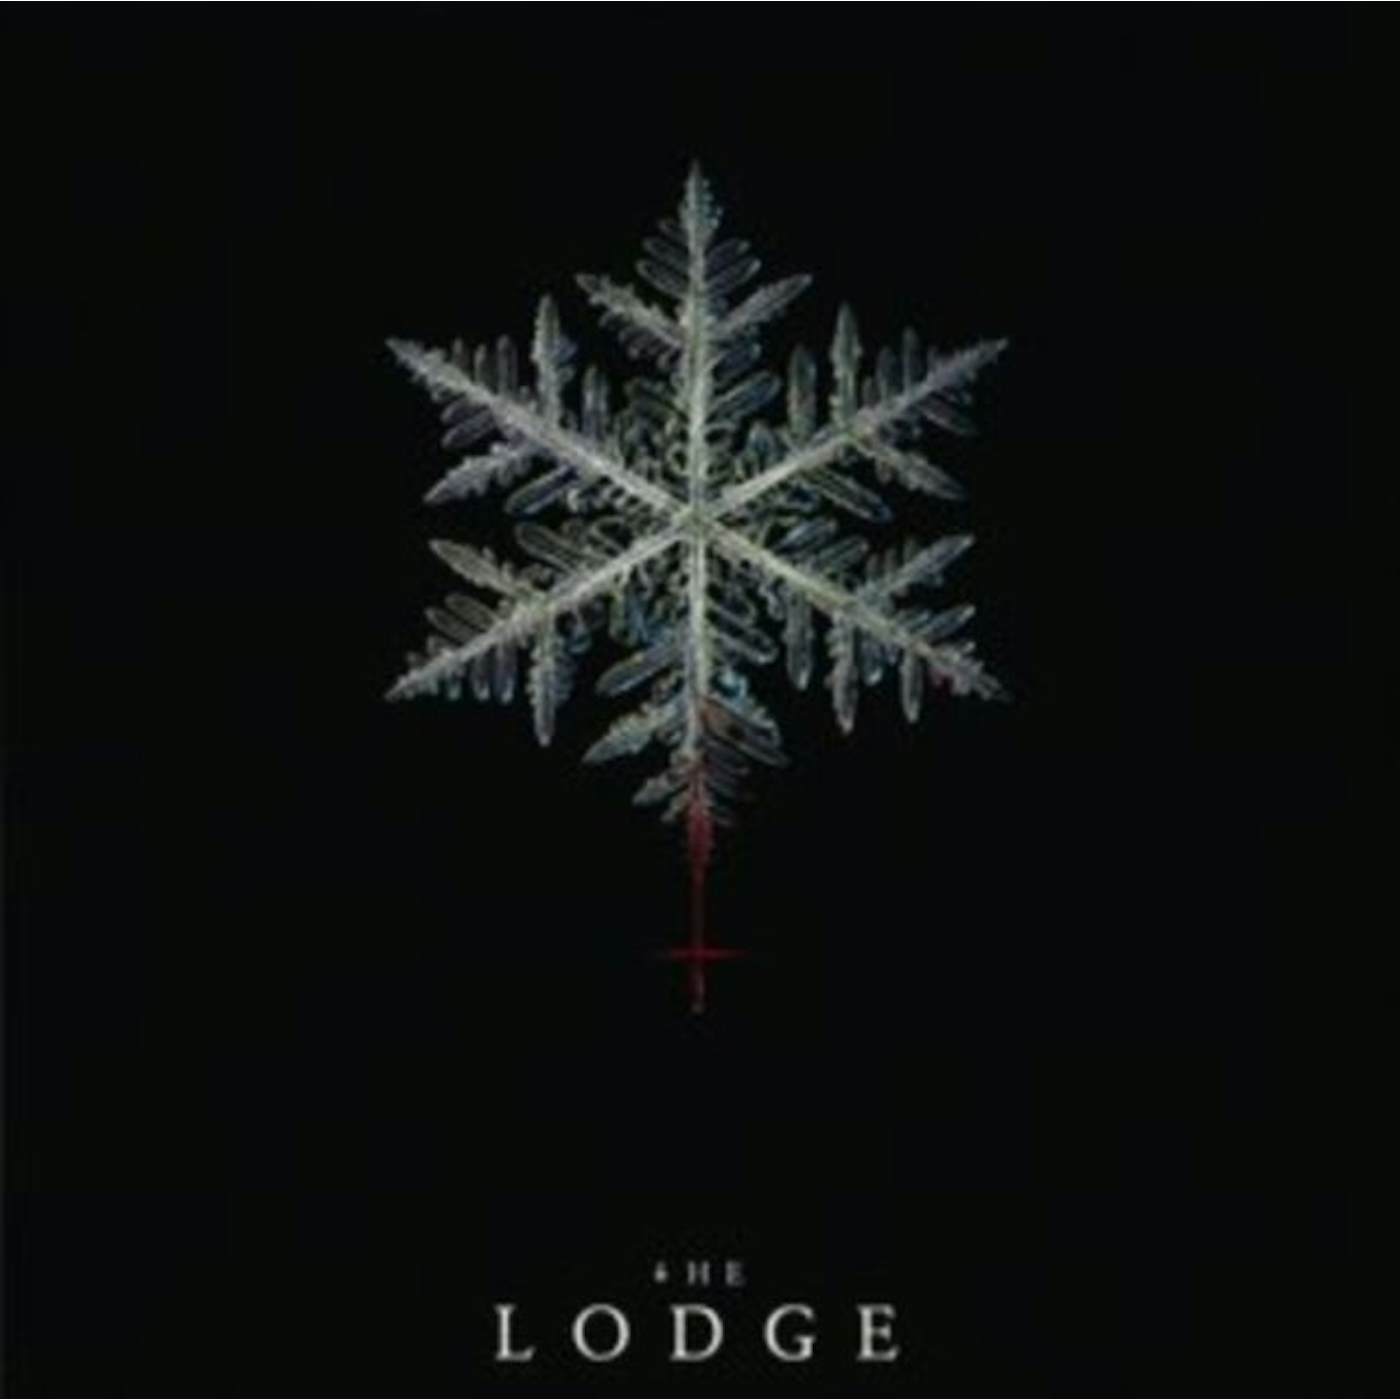 Danny Bensi and Saunder Jurriaans LP Vinyl Record - The Lodge - Original Soundtrack